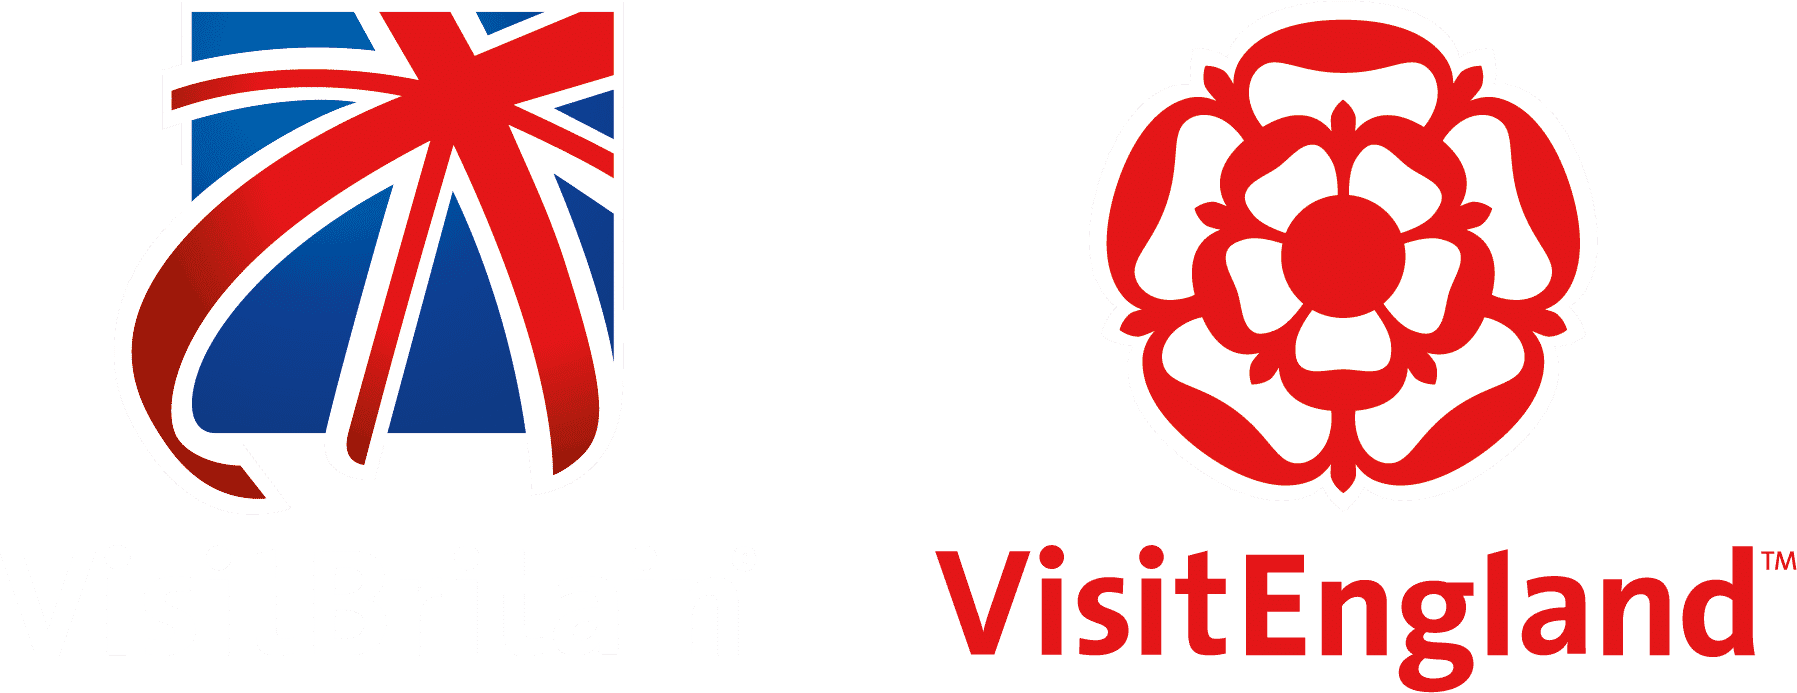 Visit Britain and Visit England logos white text